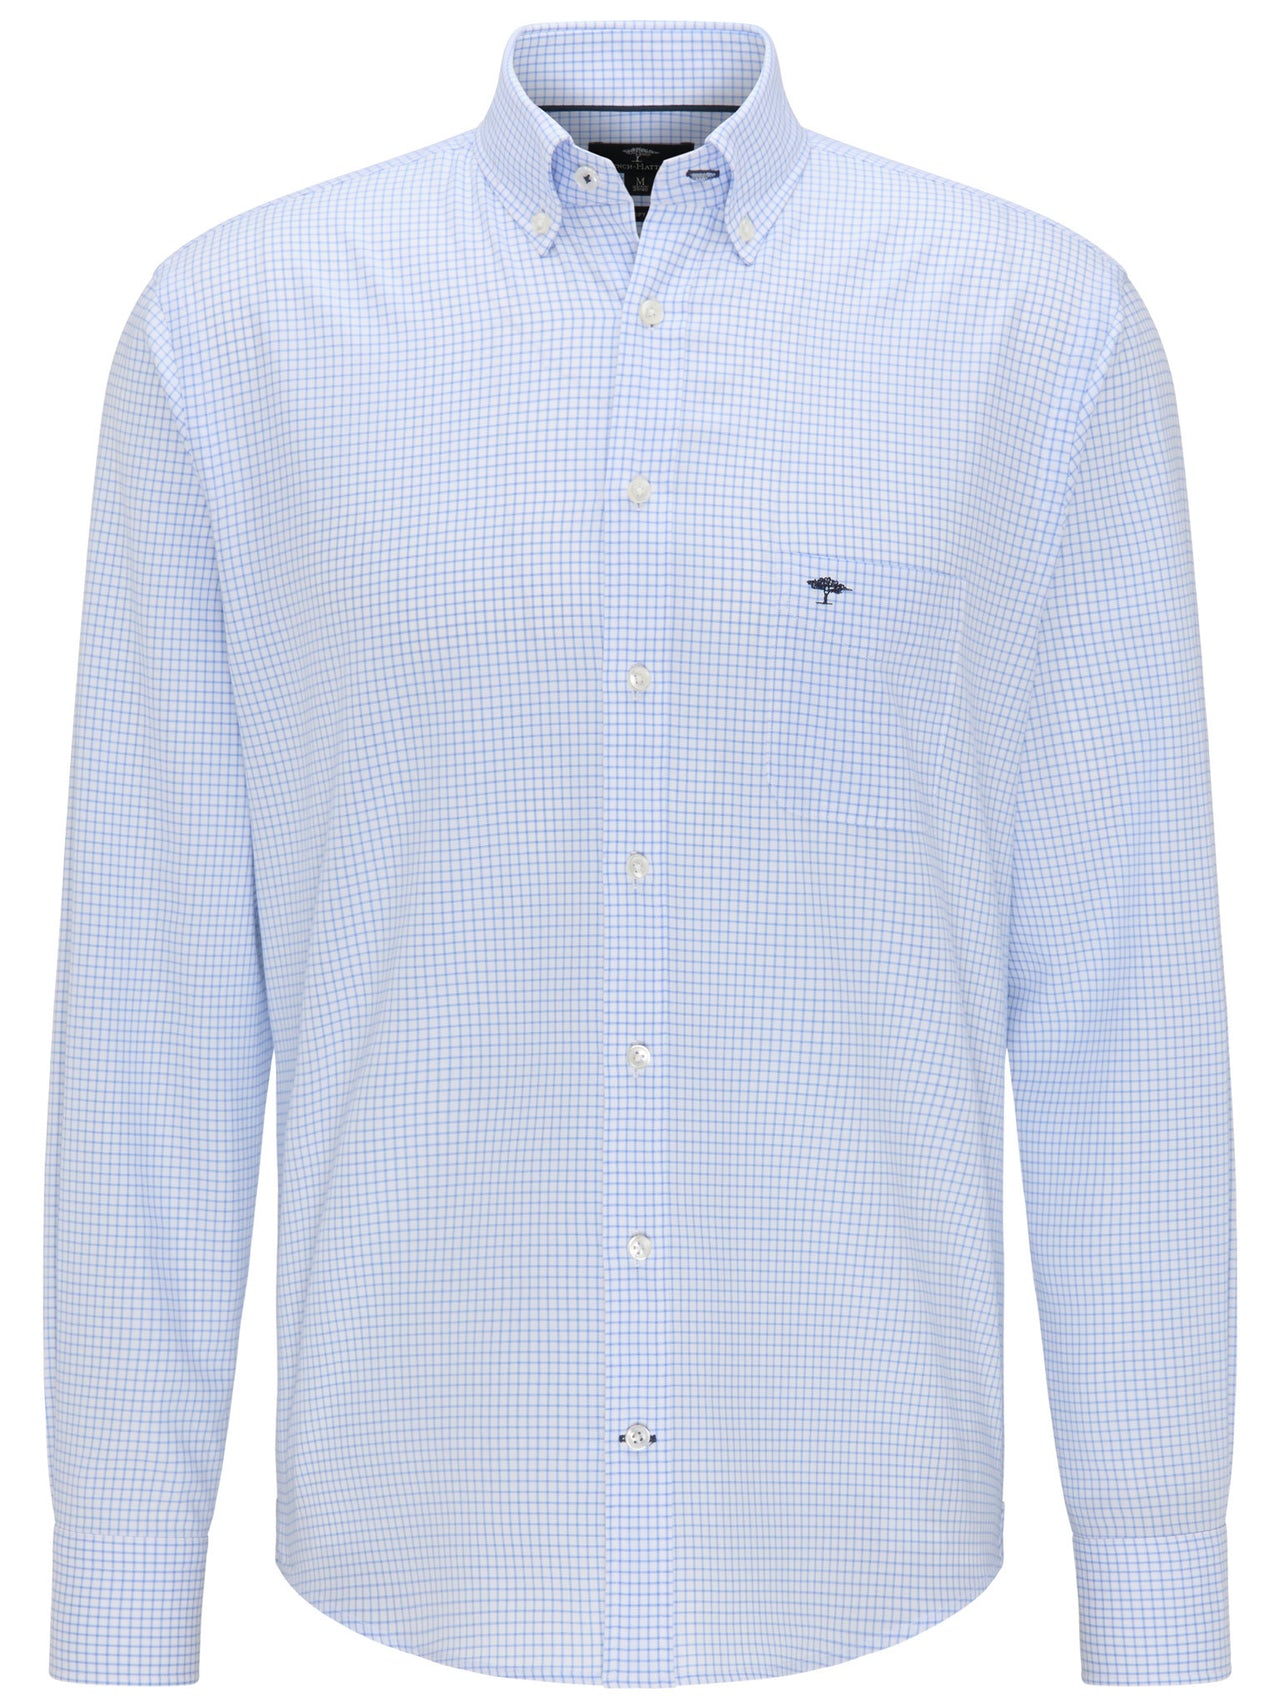 Fynch Hatton All Season Oxford Shirt in Blue Check